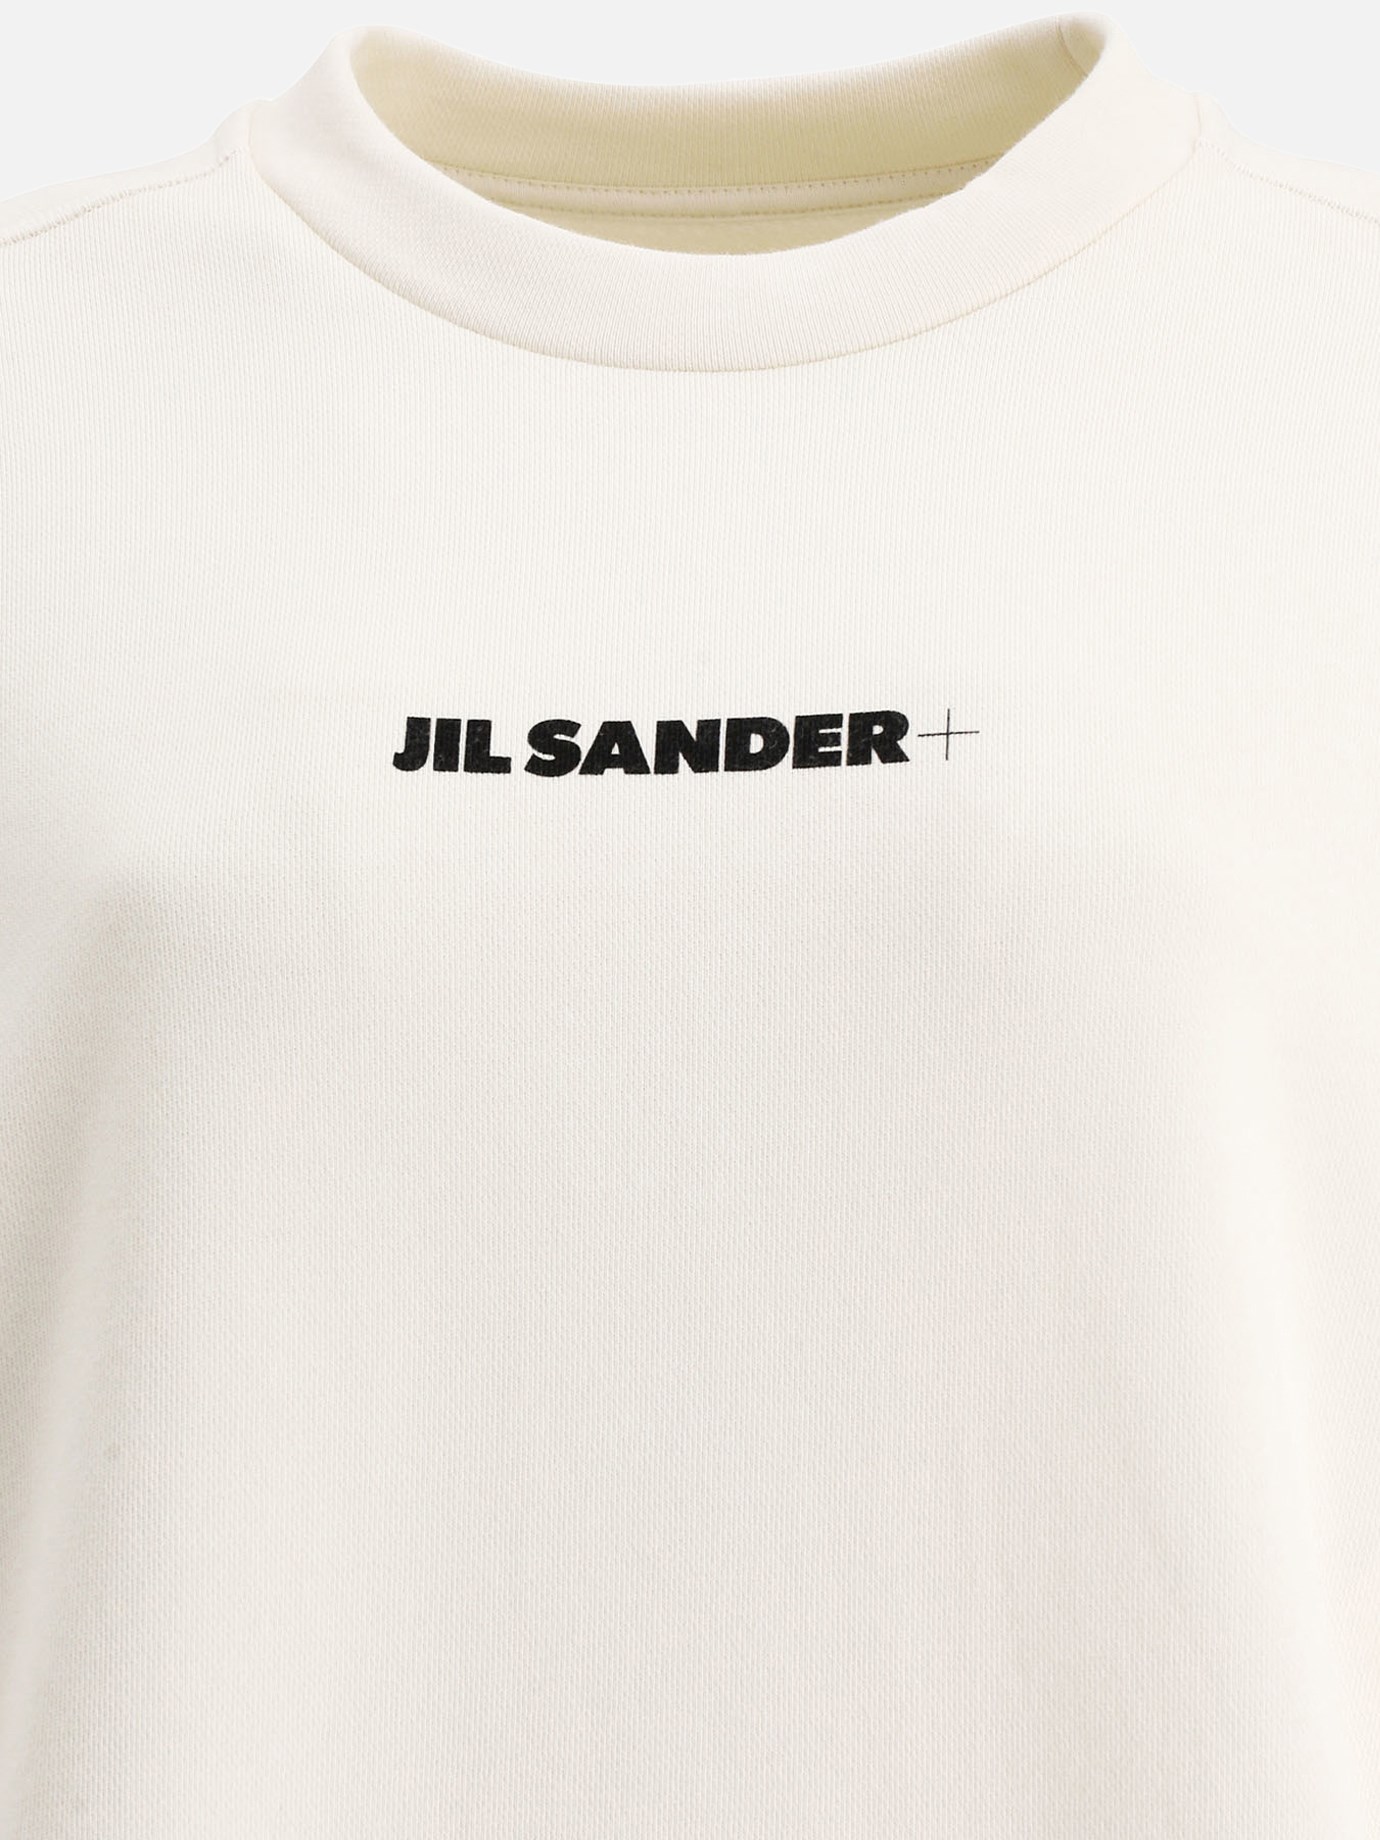  Jil Sander+  sweatshirt by Jil Sander